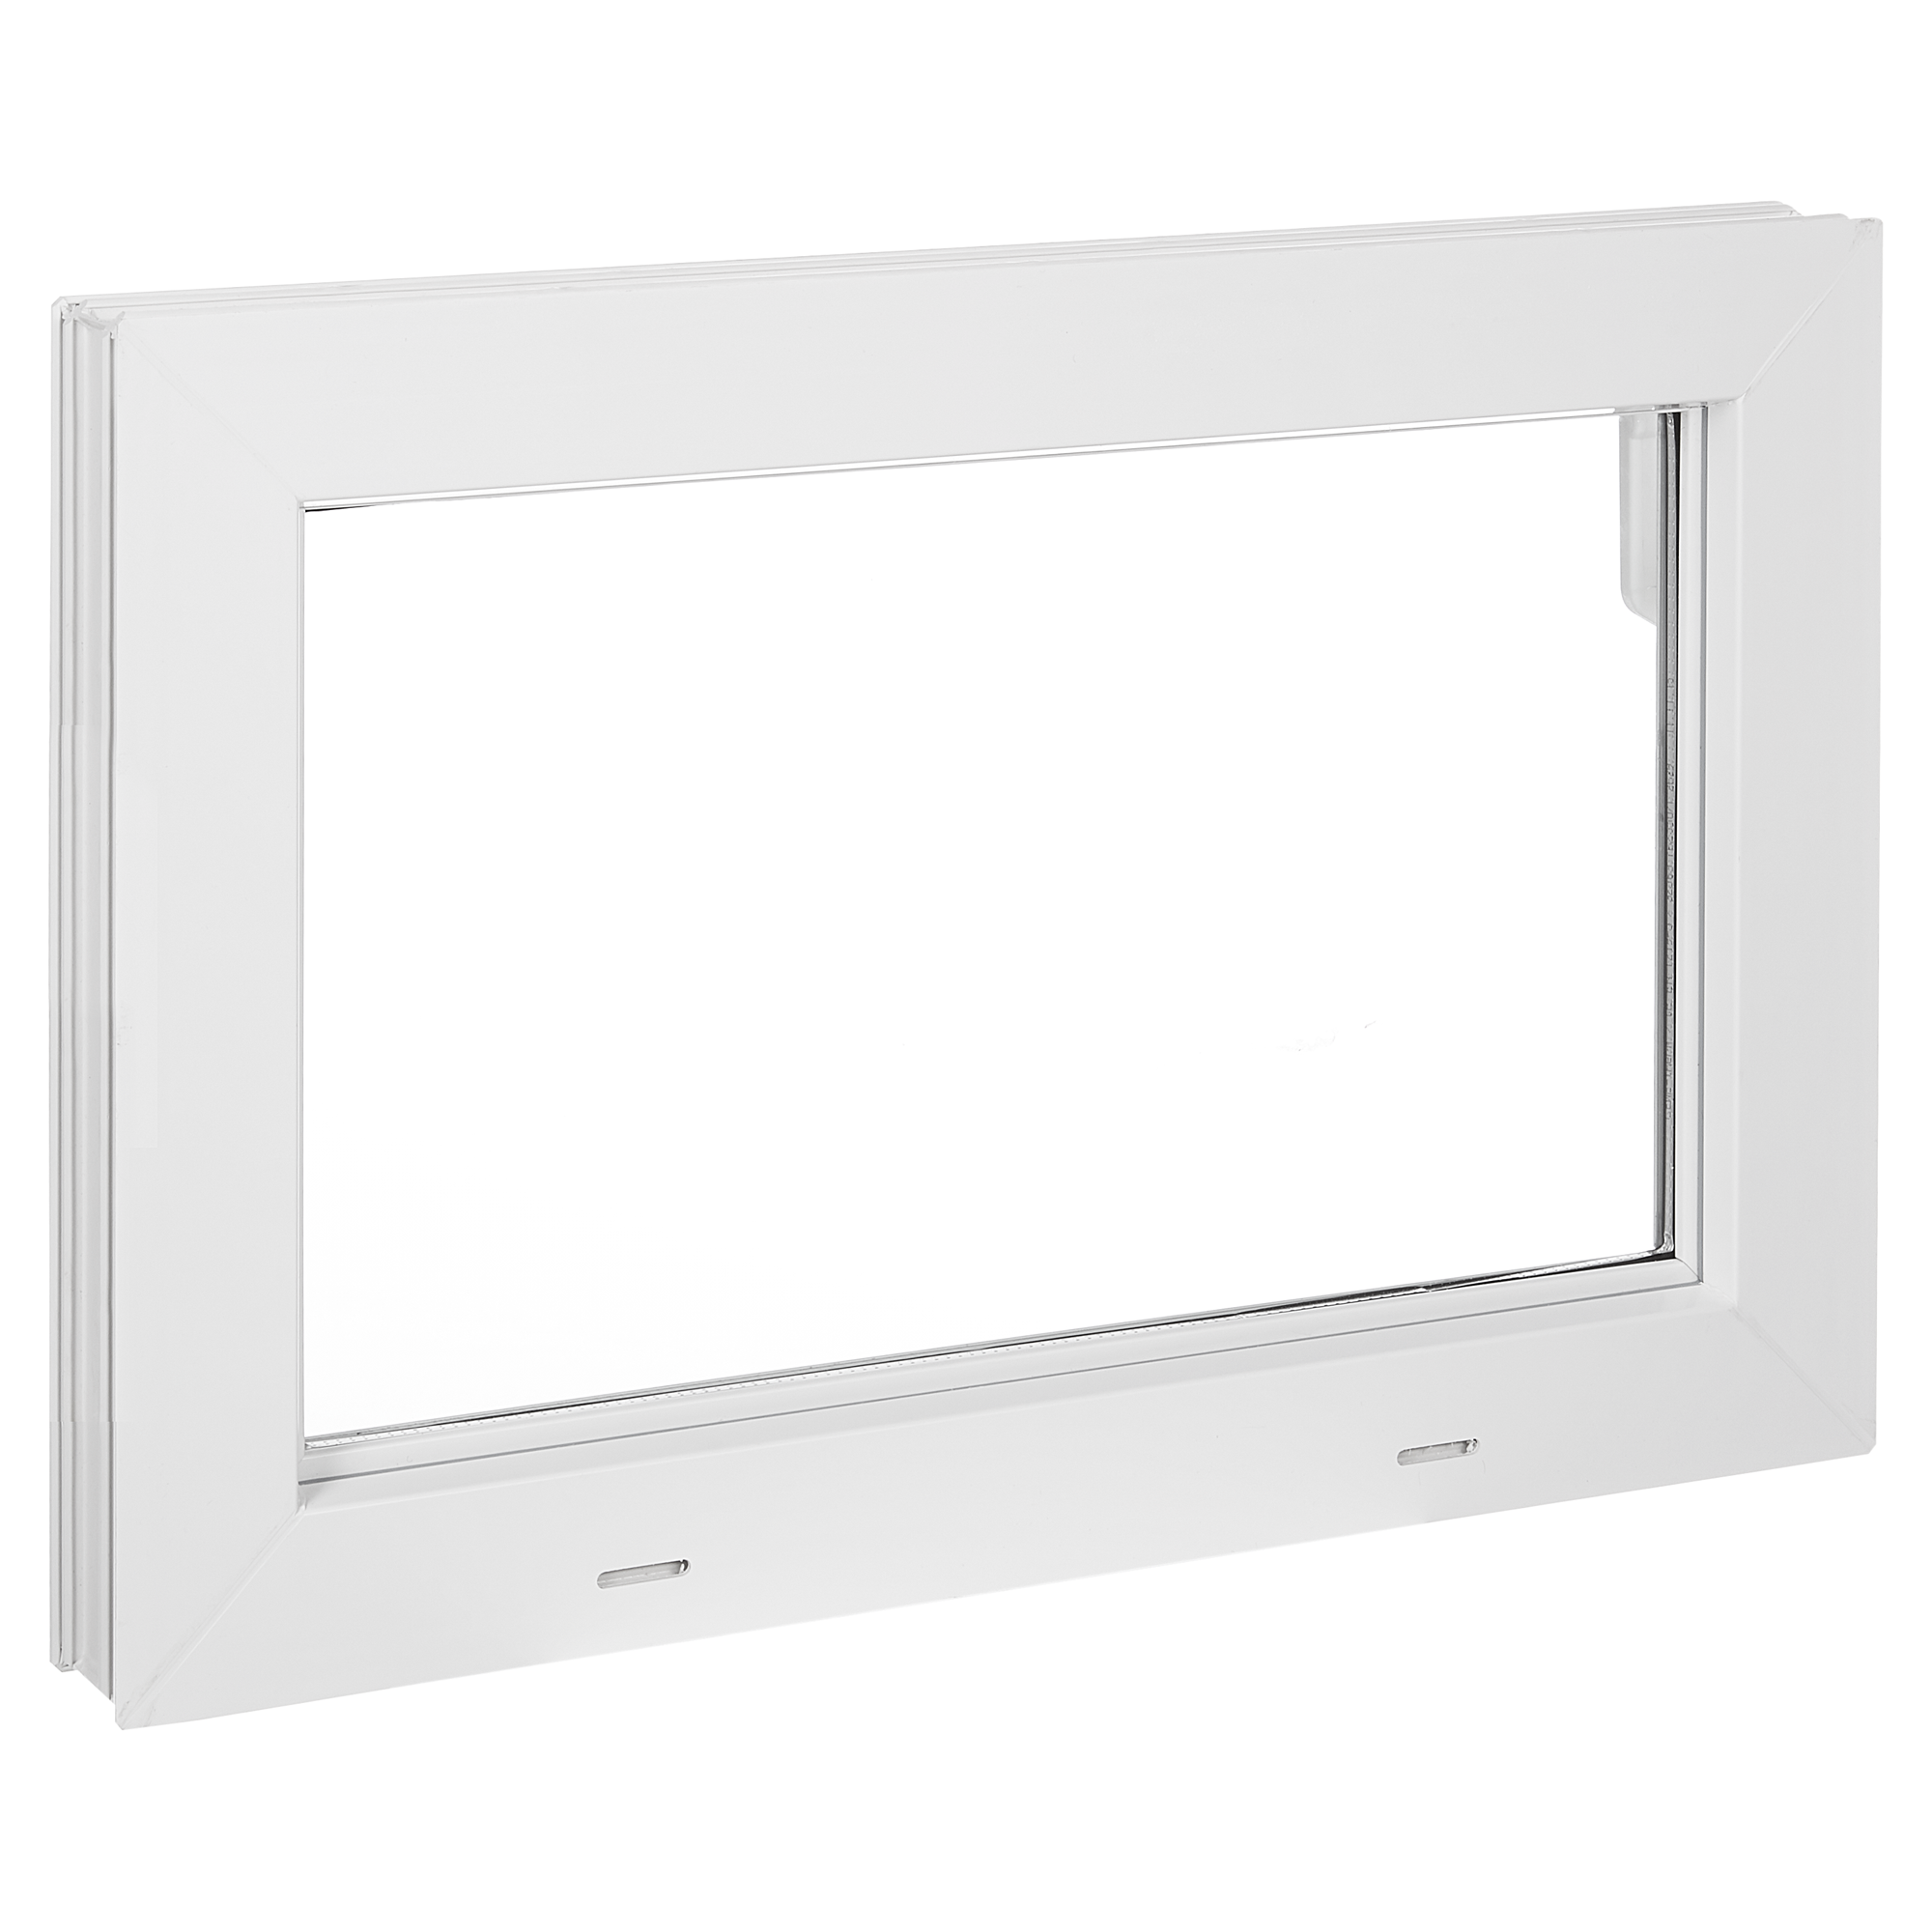 Kippfenster weiß 1-flügelig 90 x 60 cm + product picture